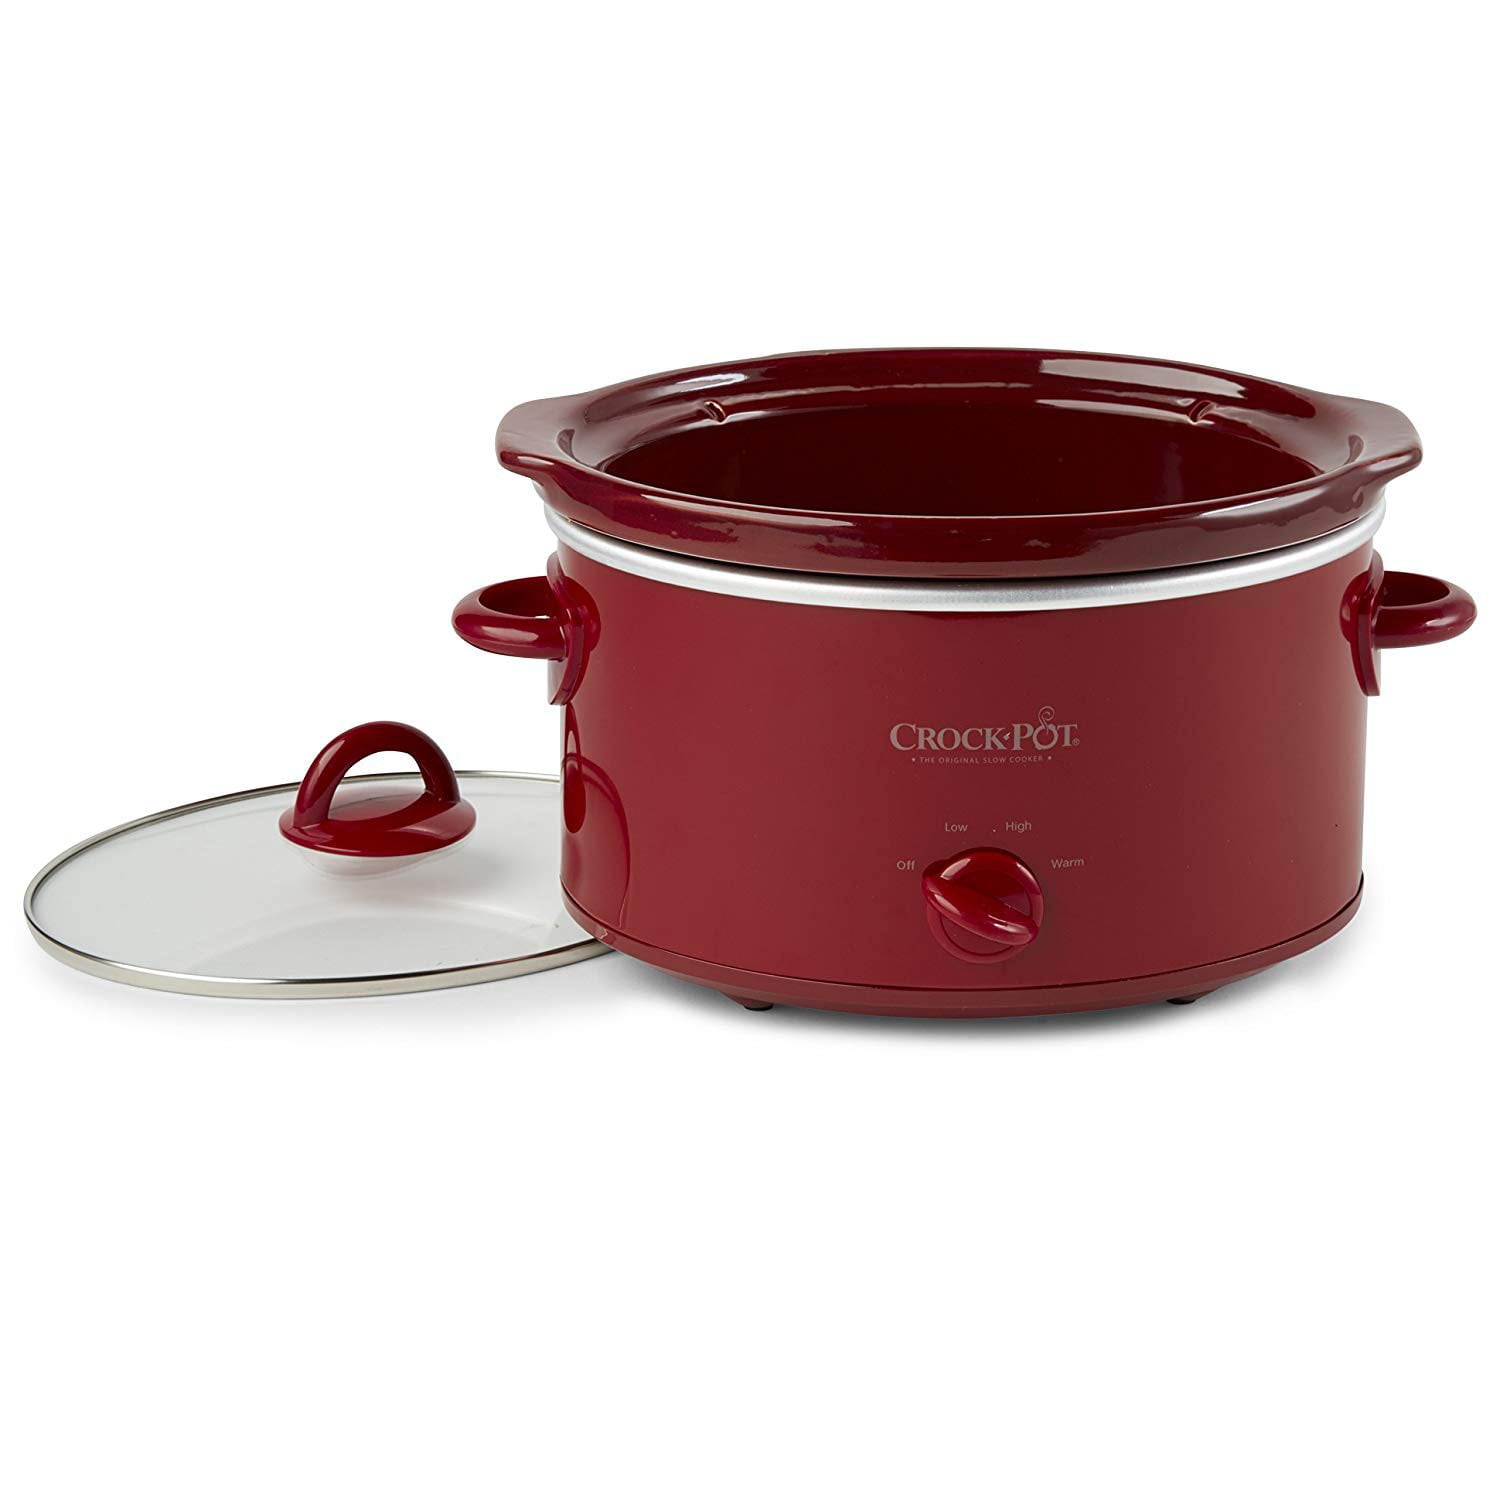 Crock-Pot 4 Qt. Red Oval Slow Cooker